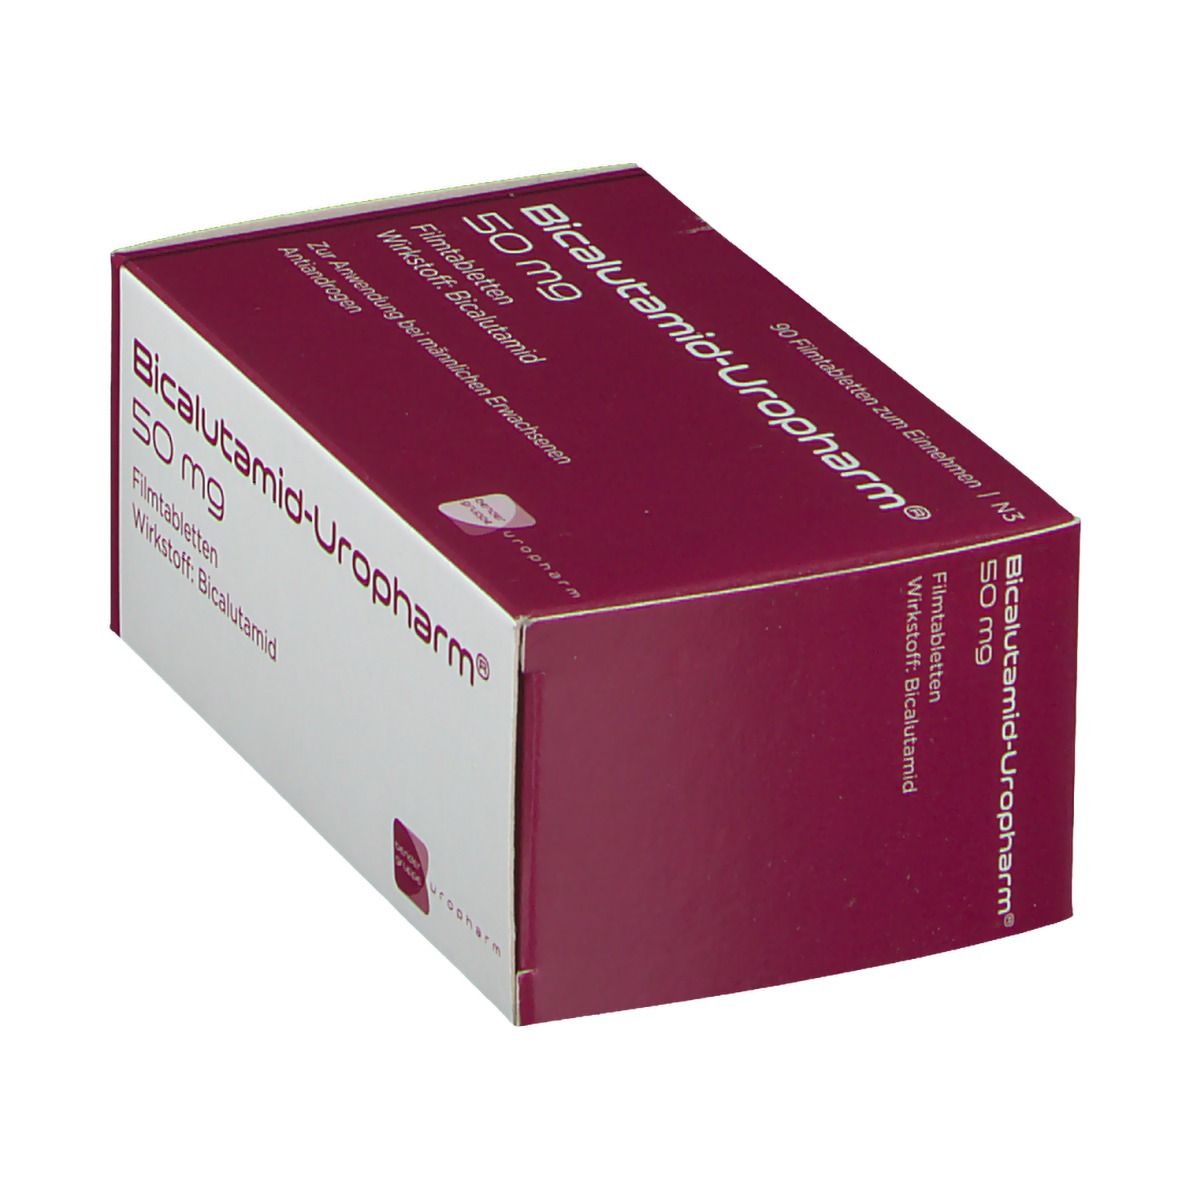 Bicalutamid-Uropharm® 50 mg